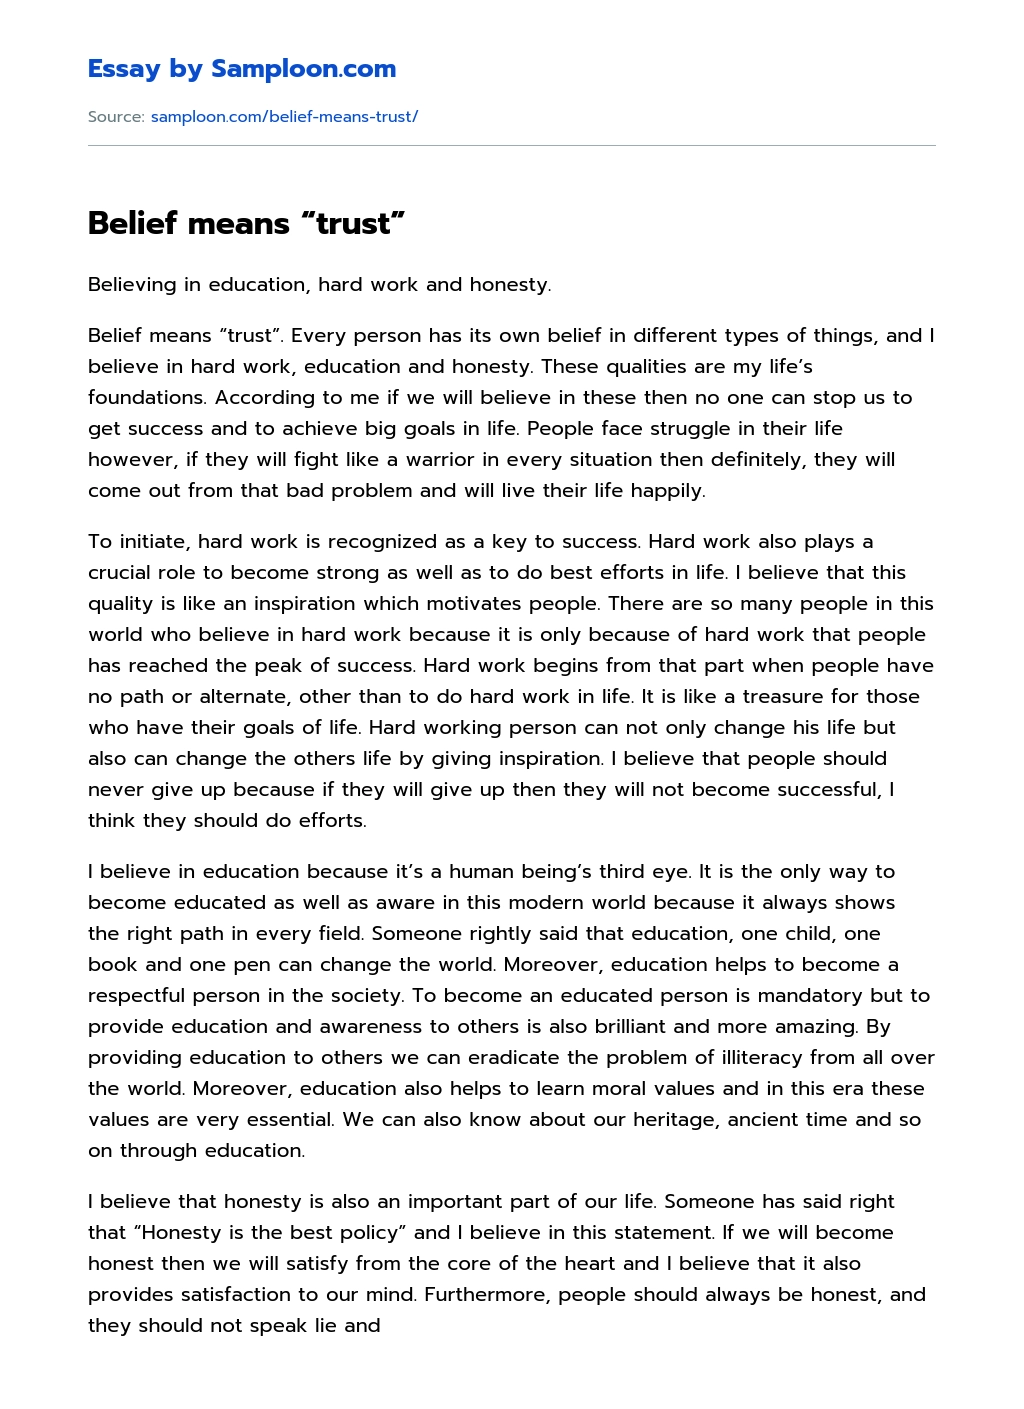 Belief means “trust” essay